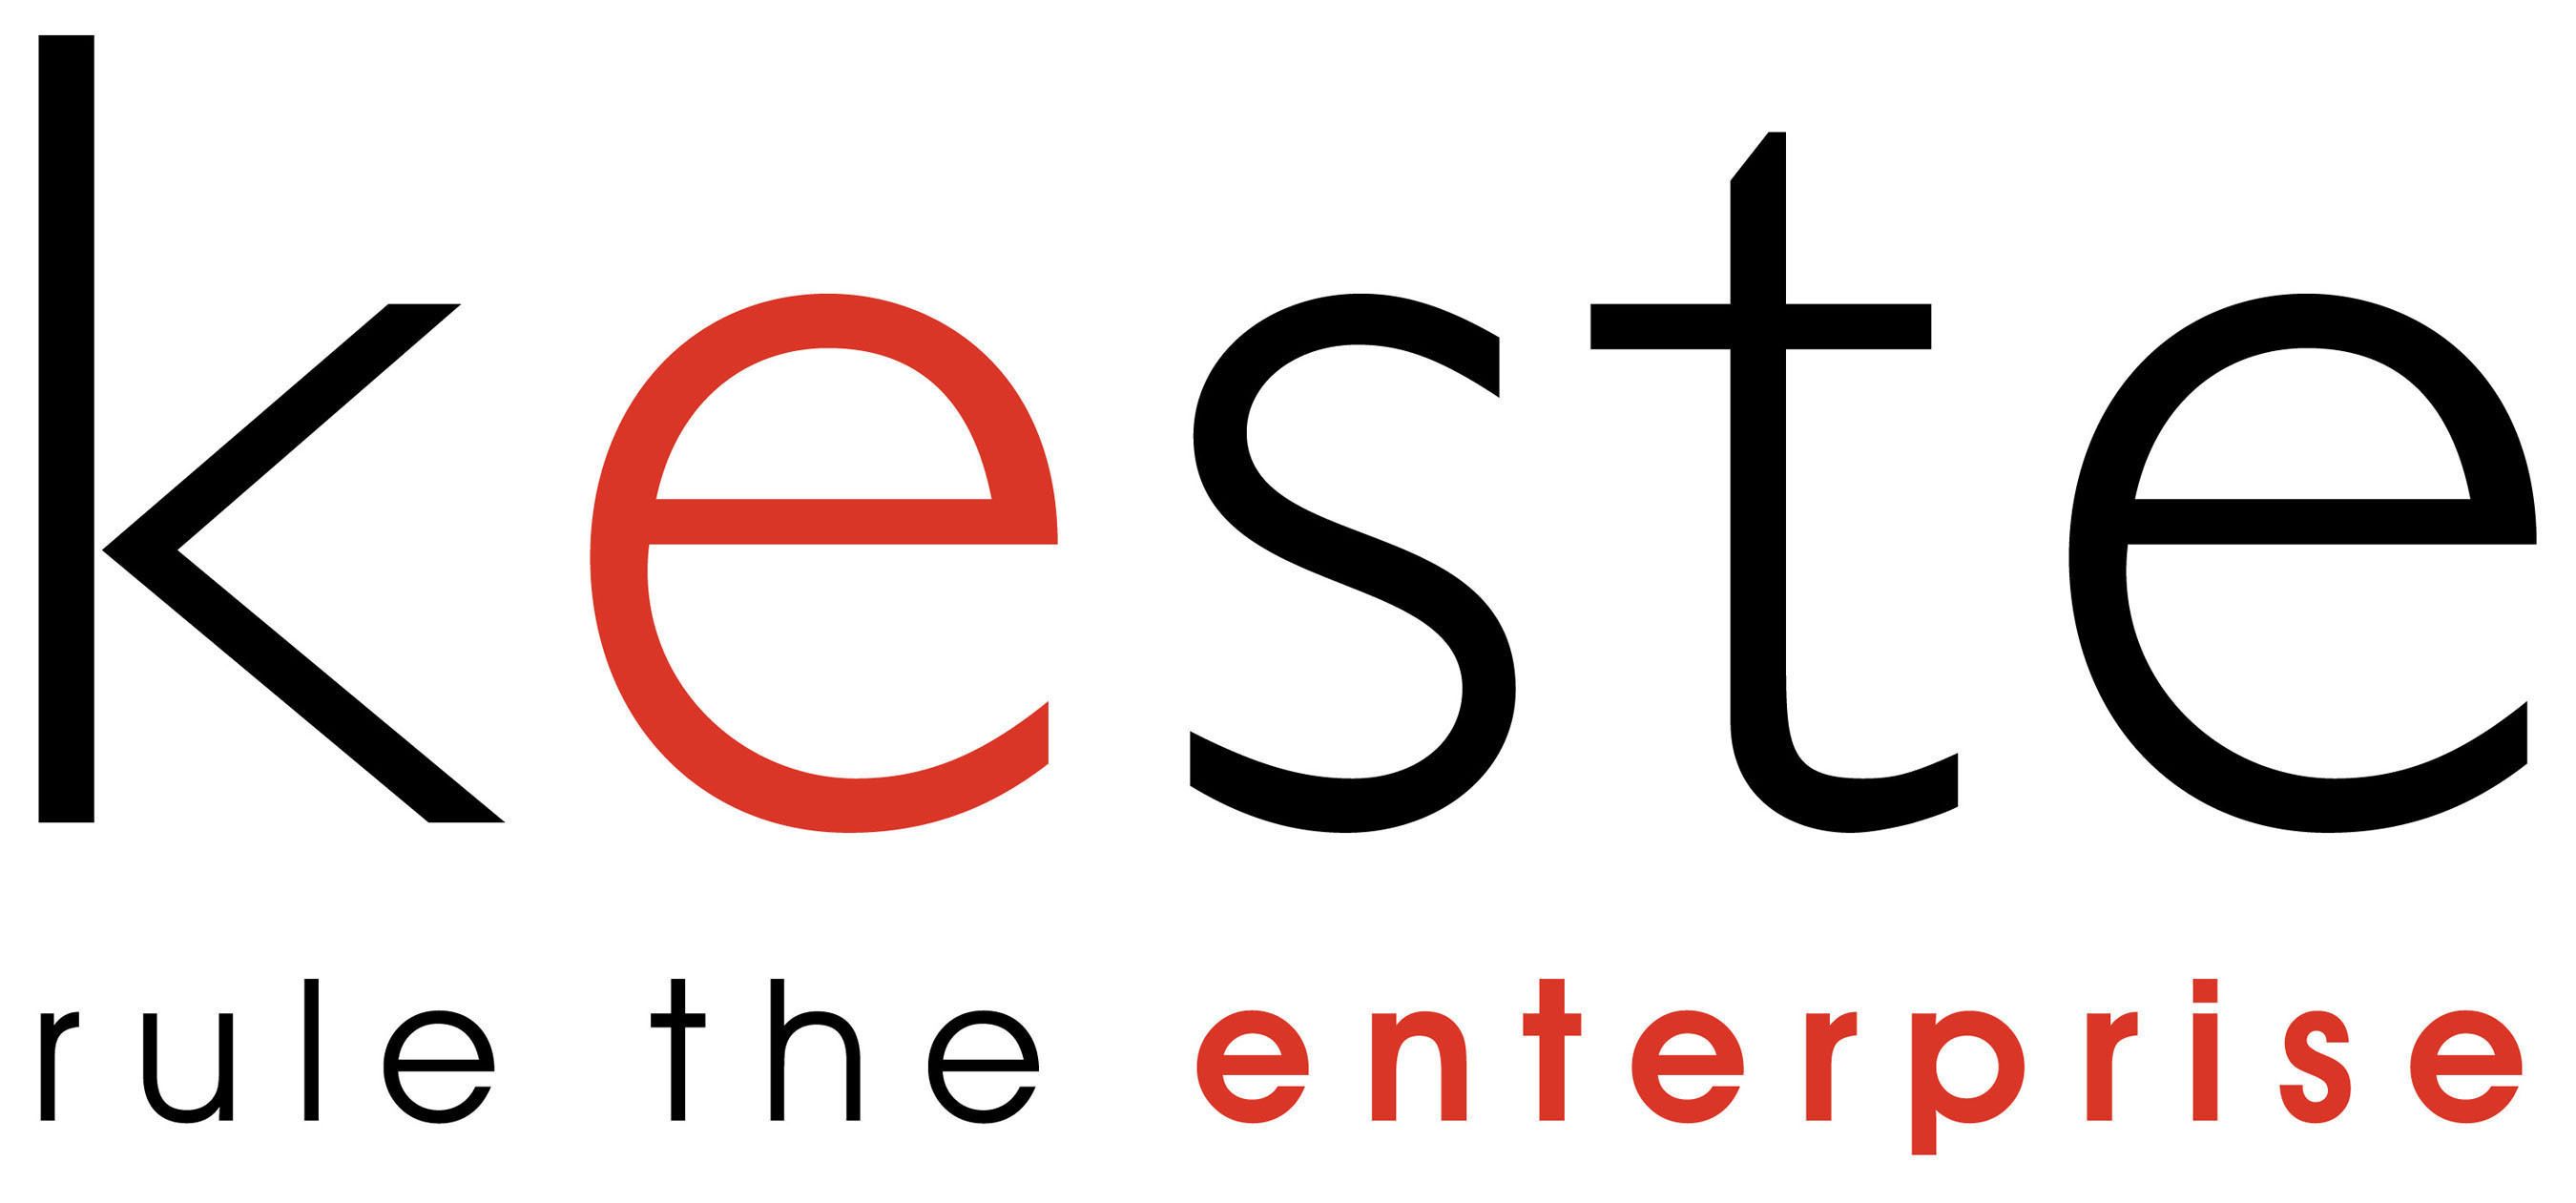 Keste logo (PRNewsFoto/Keste) (PRNewsFoto/)